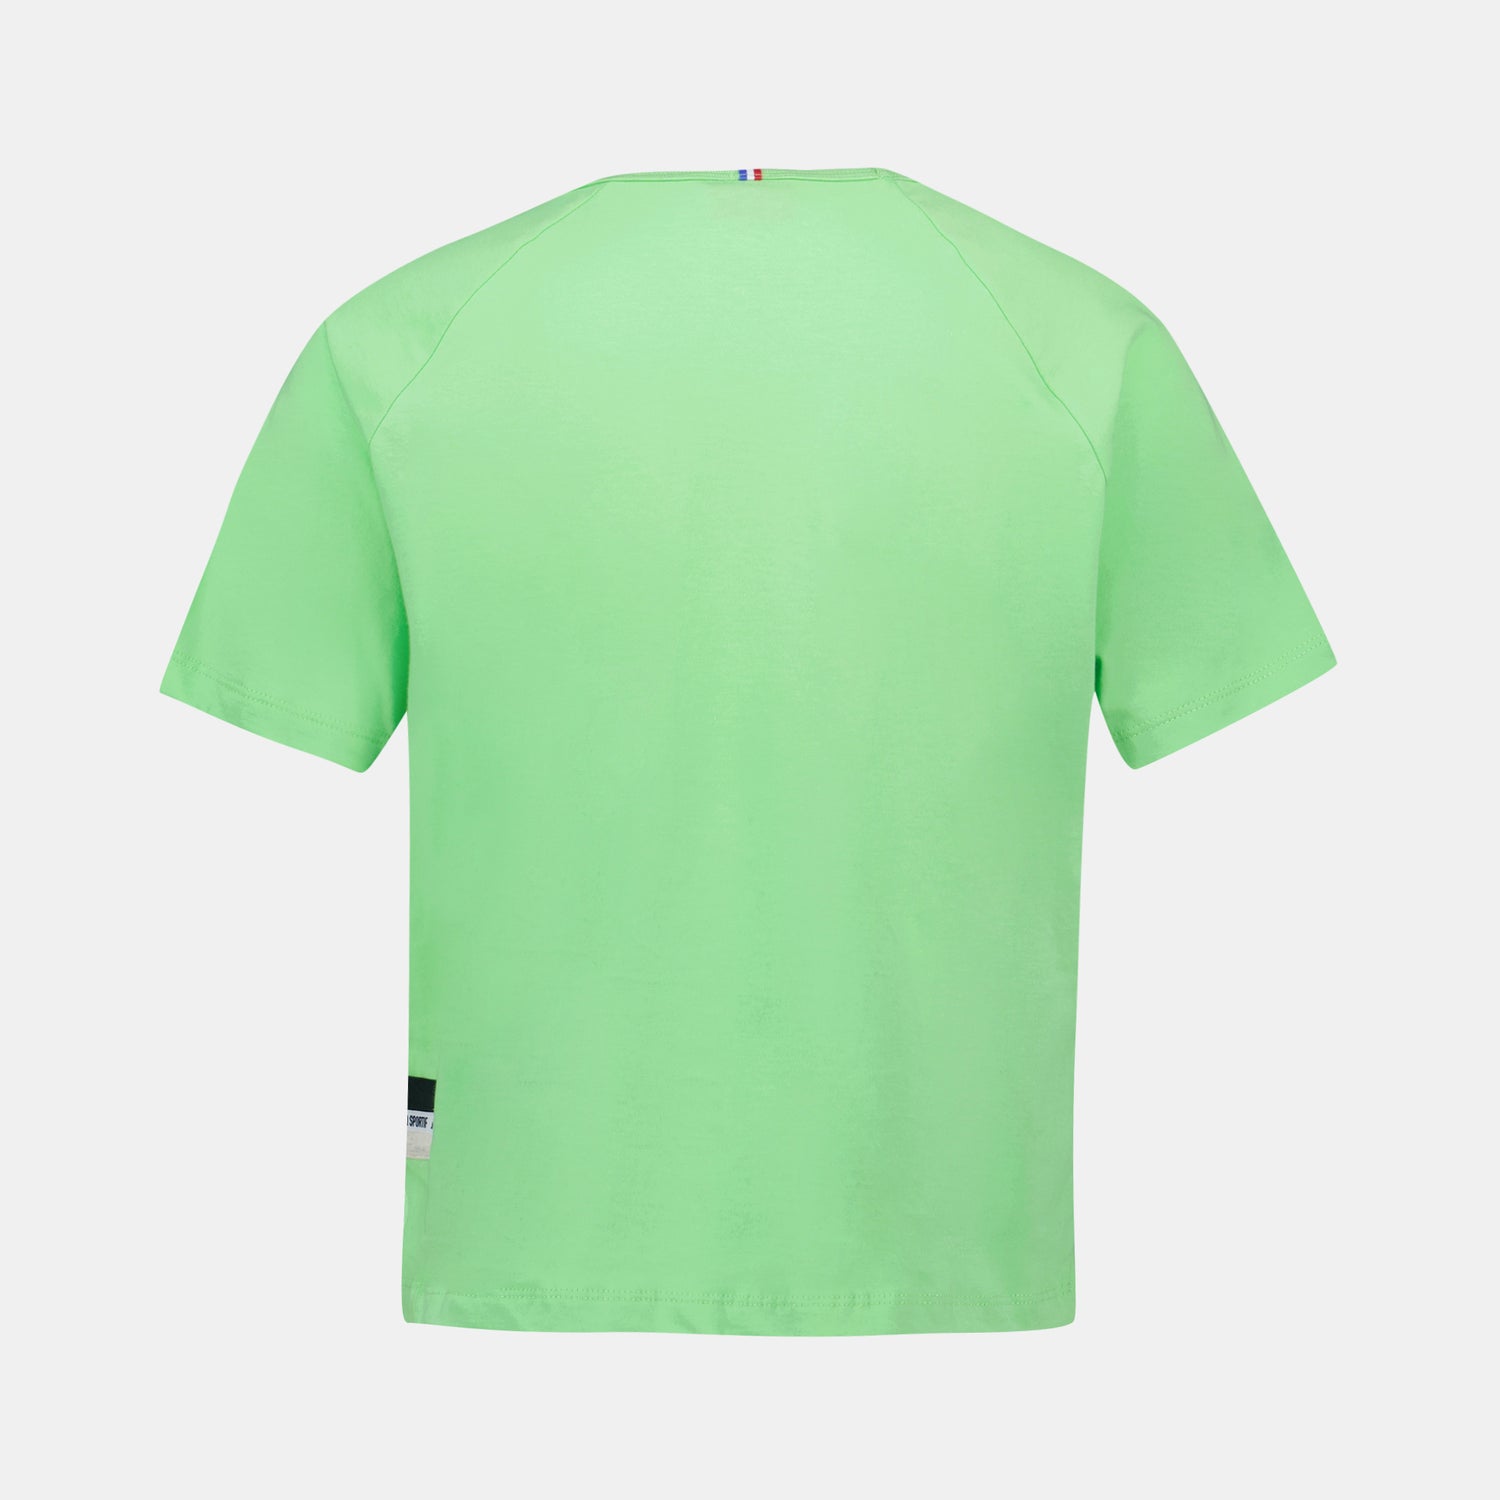 2410179-SAISON Tee SS N°1 W greengage | T-shirt Femme